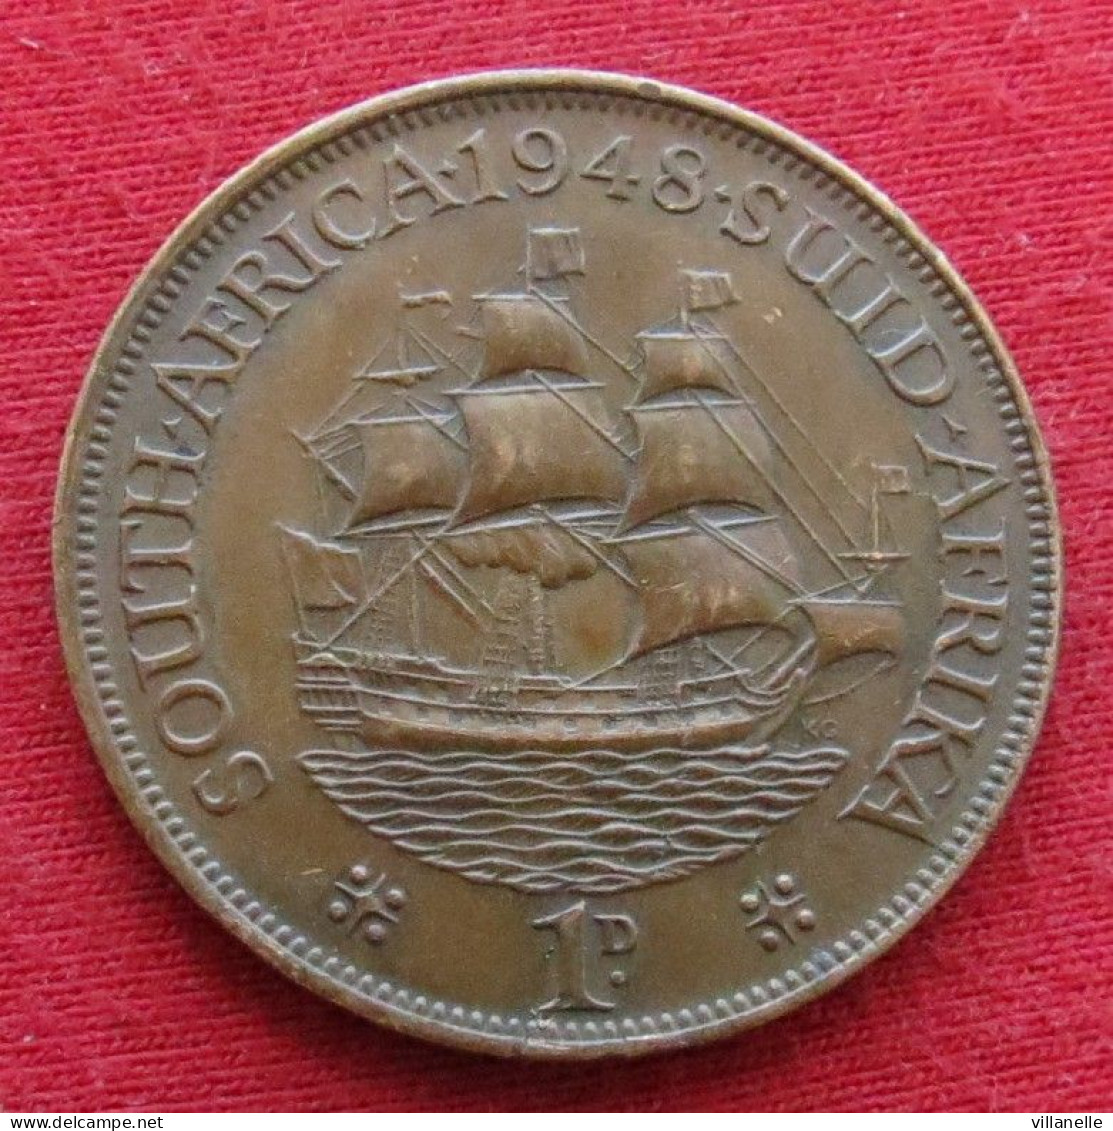 South Africa 1 penny 1948   Africa do Sul RSA Afrique do sud Afrika   W ºº